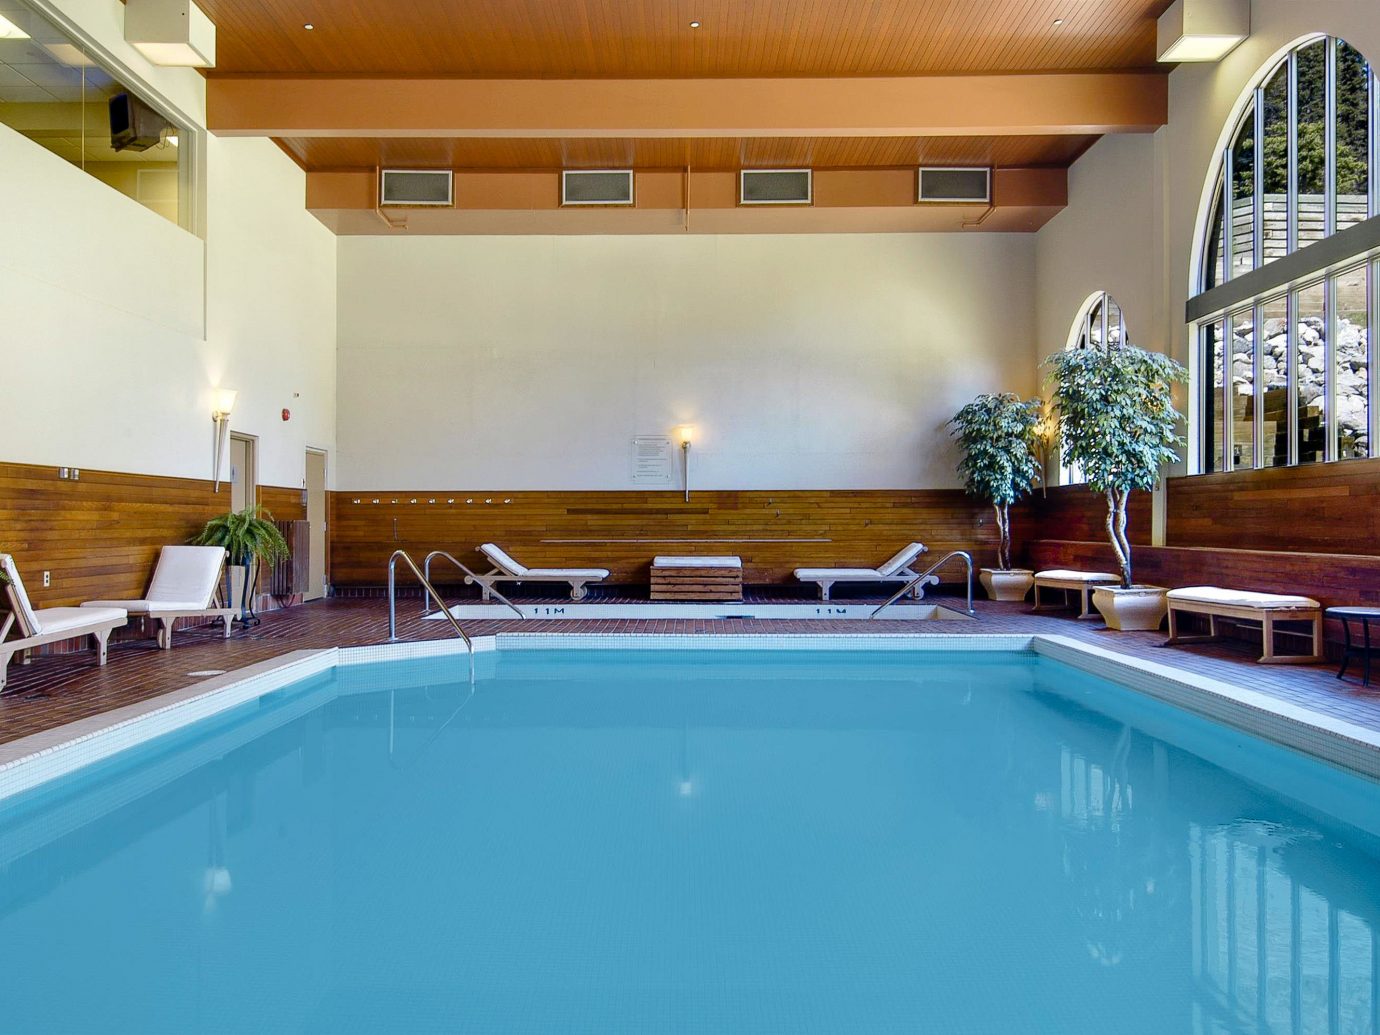 Alberta Boutique Hotels Canada Hotels swimming pool leisure real estate estate interior design amenity Resort hotel leisure centre Pool